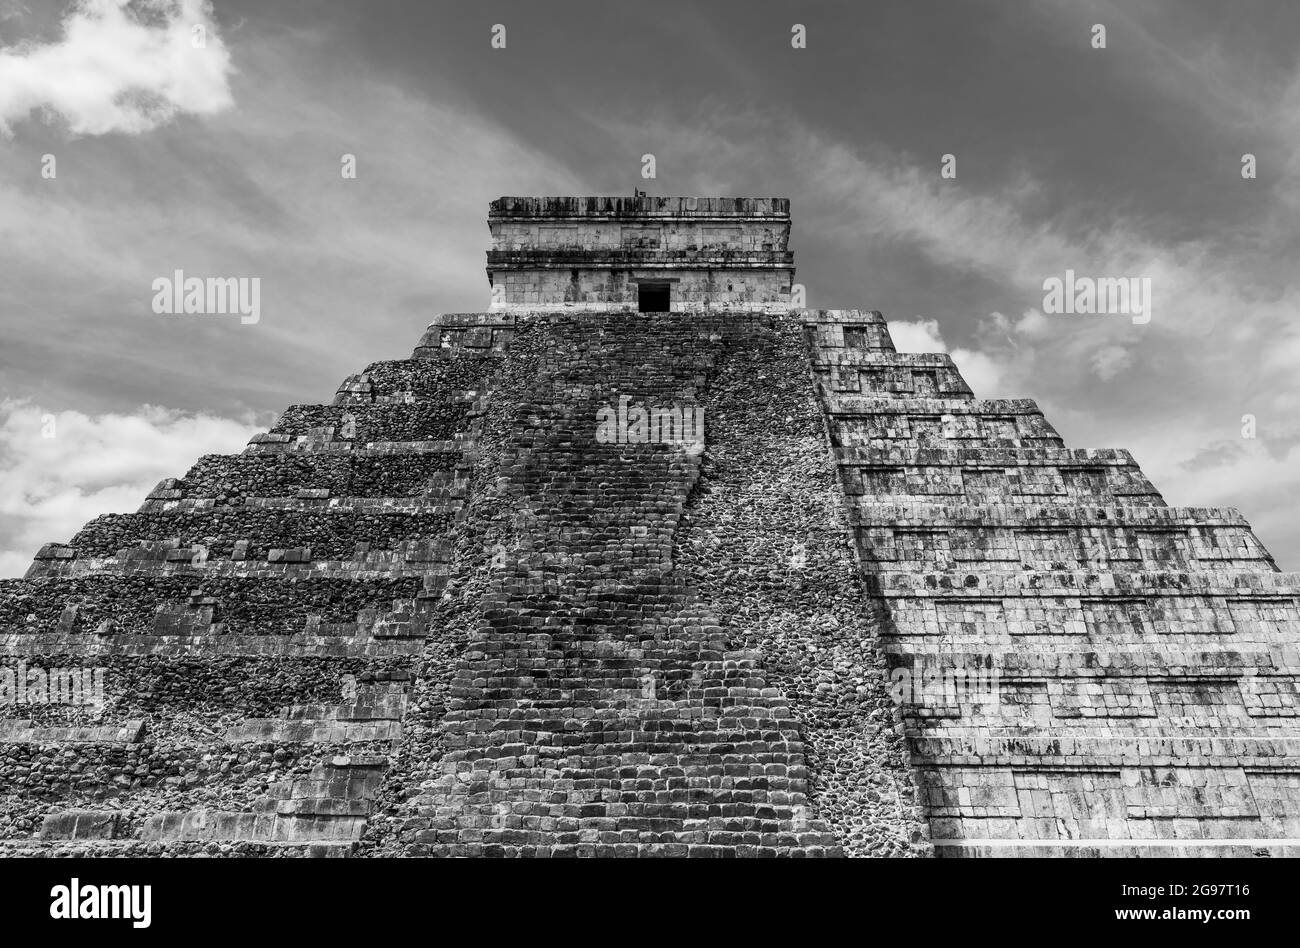 Kukulkan mayan pyramid in black and white, Chichen Itza, Yucatan, Mexico. Stock Photo